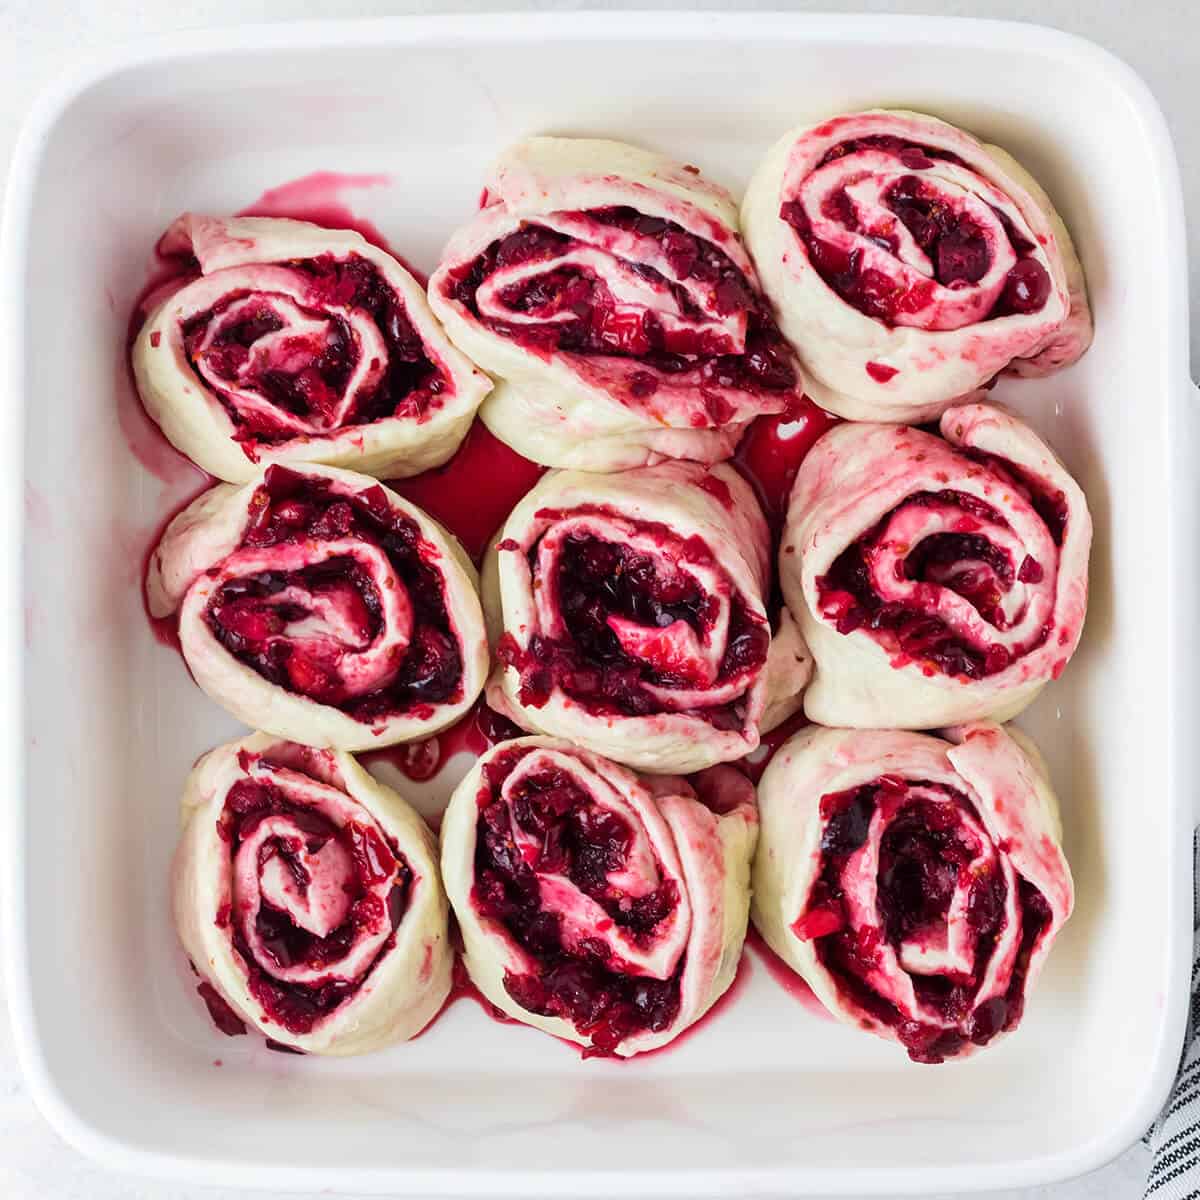 Cut rolls in a baking dish.